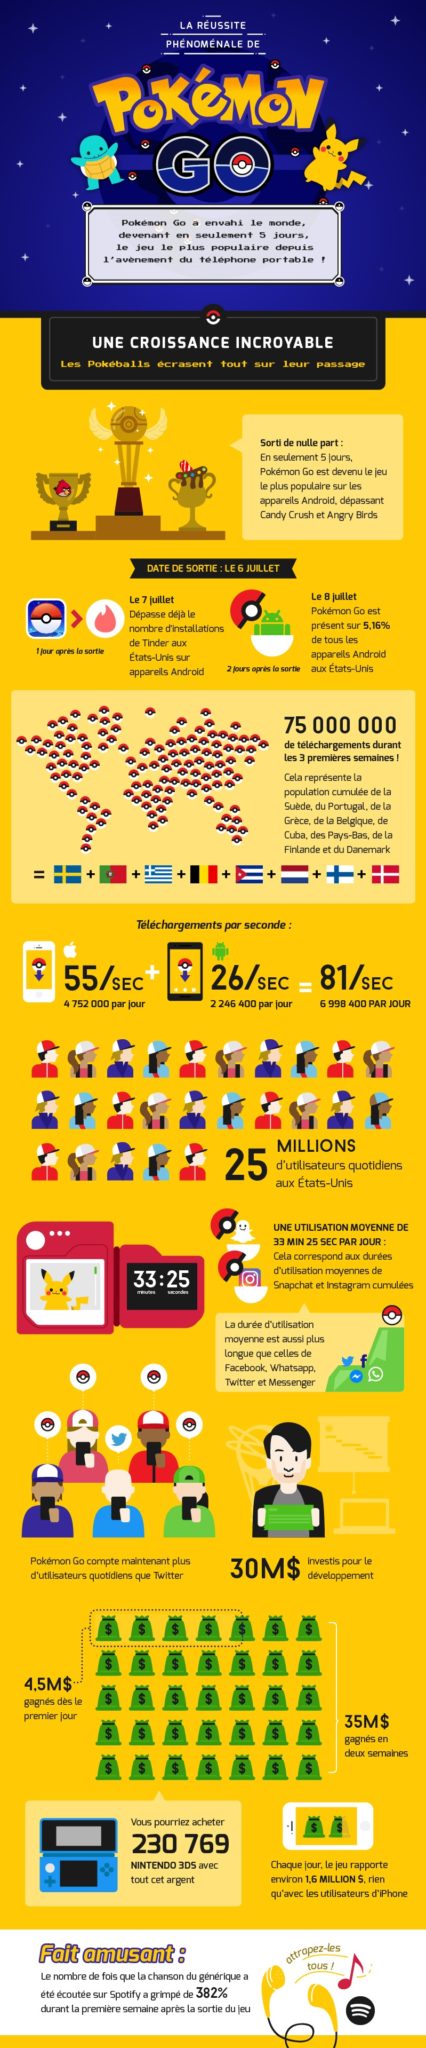 Pokémon Go - Infografica sul successo globale